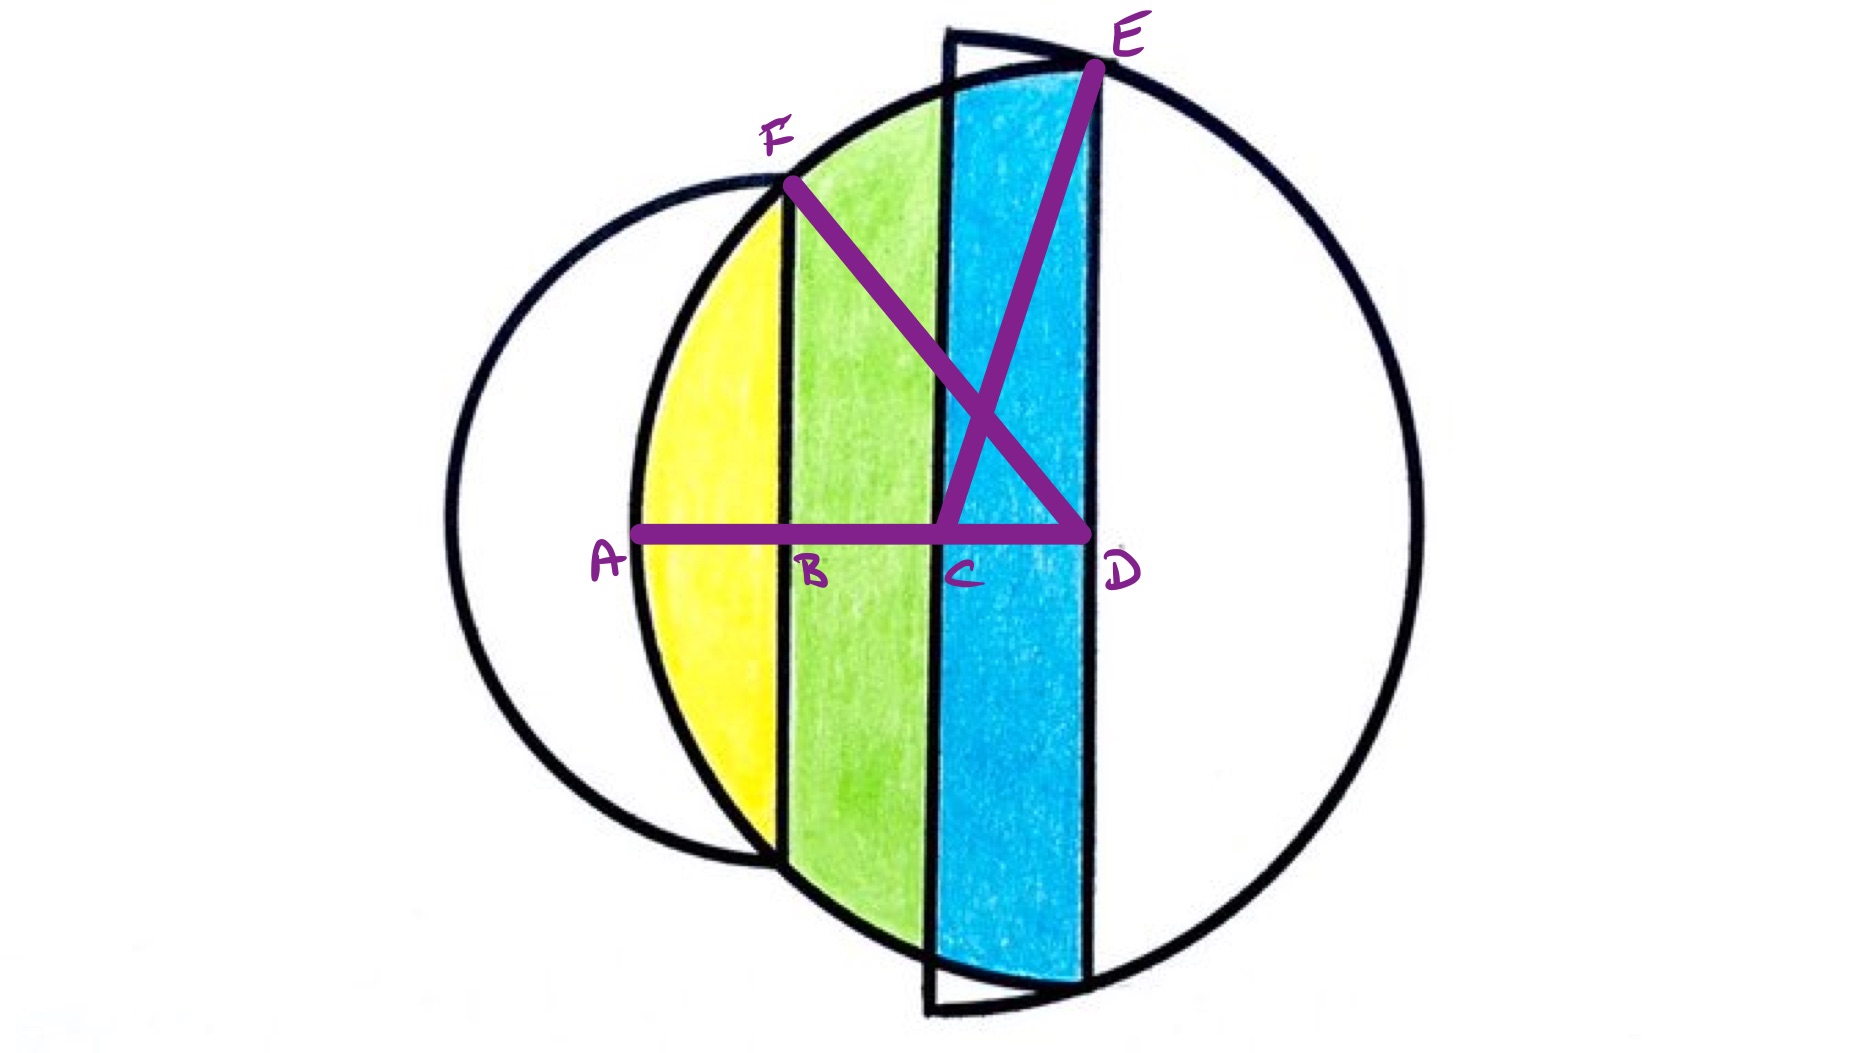 Three semi-circles labelled